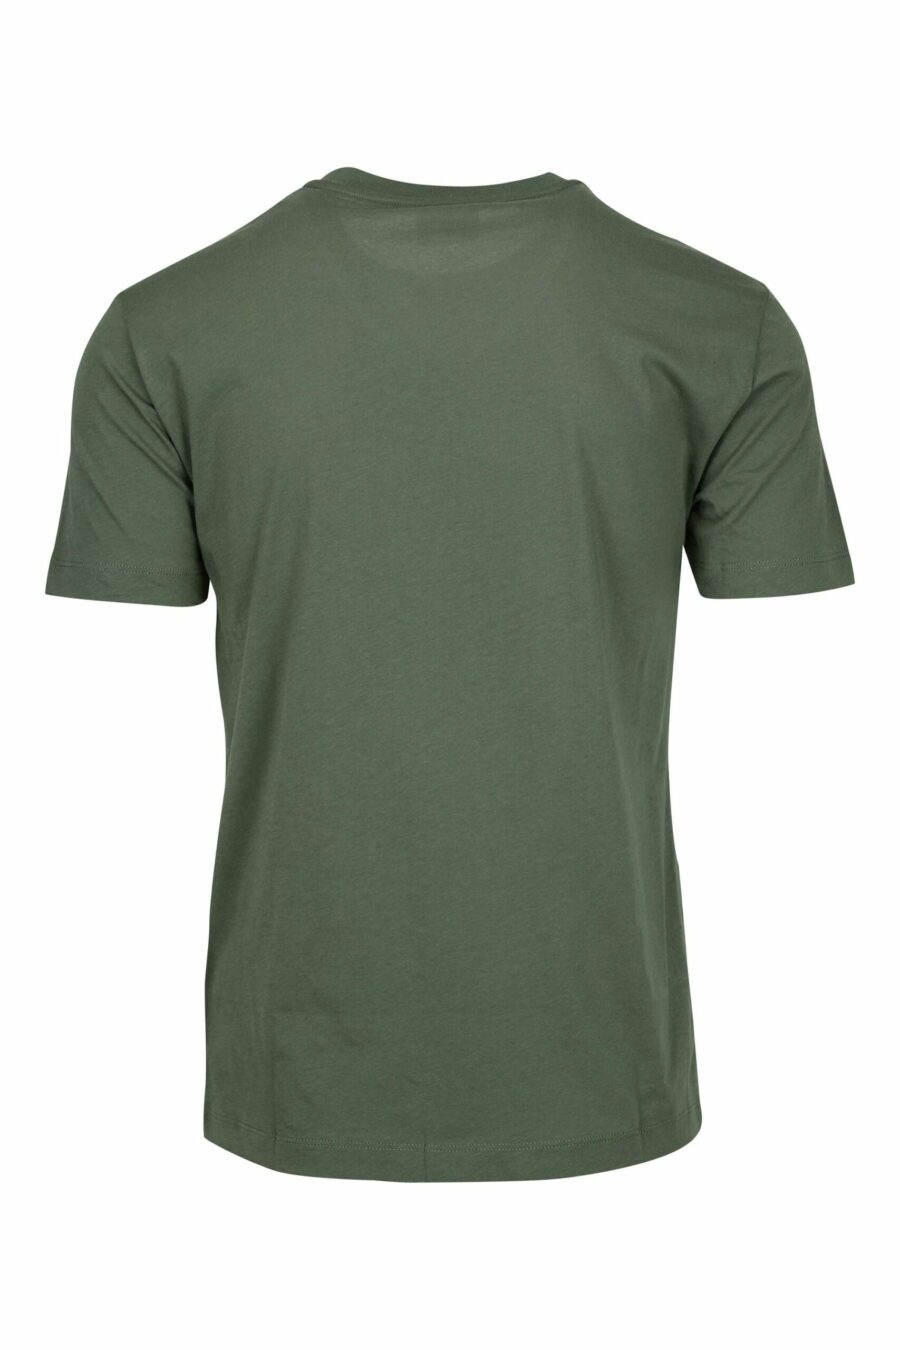 T-shirt verde com gradiente "lux identity" maxilogo - 8058947508334 1 à escala